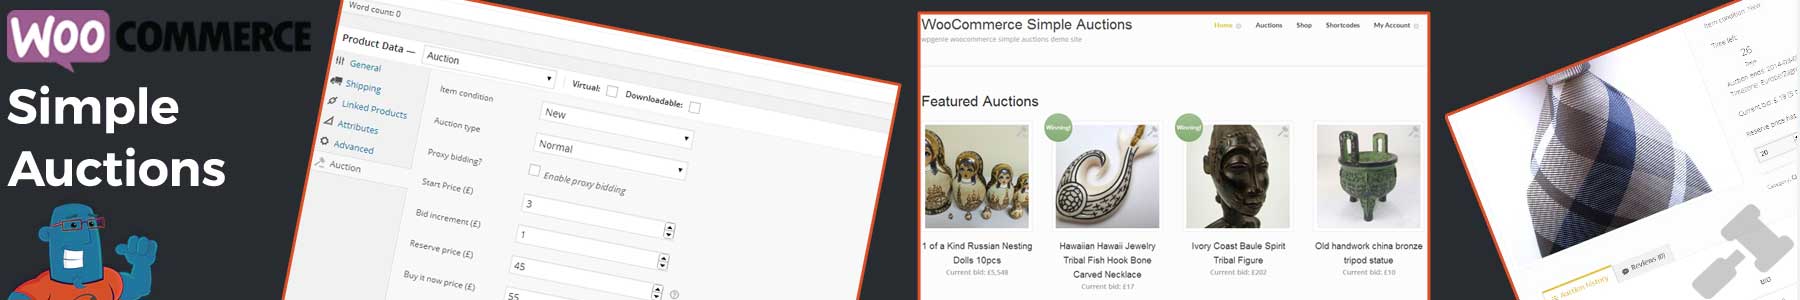 WooCommerce Simple Auctions plugin